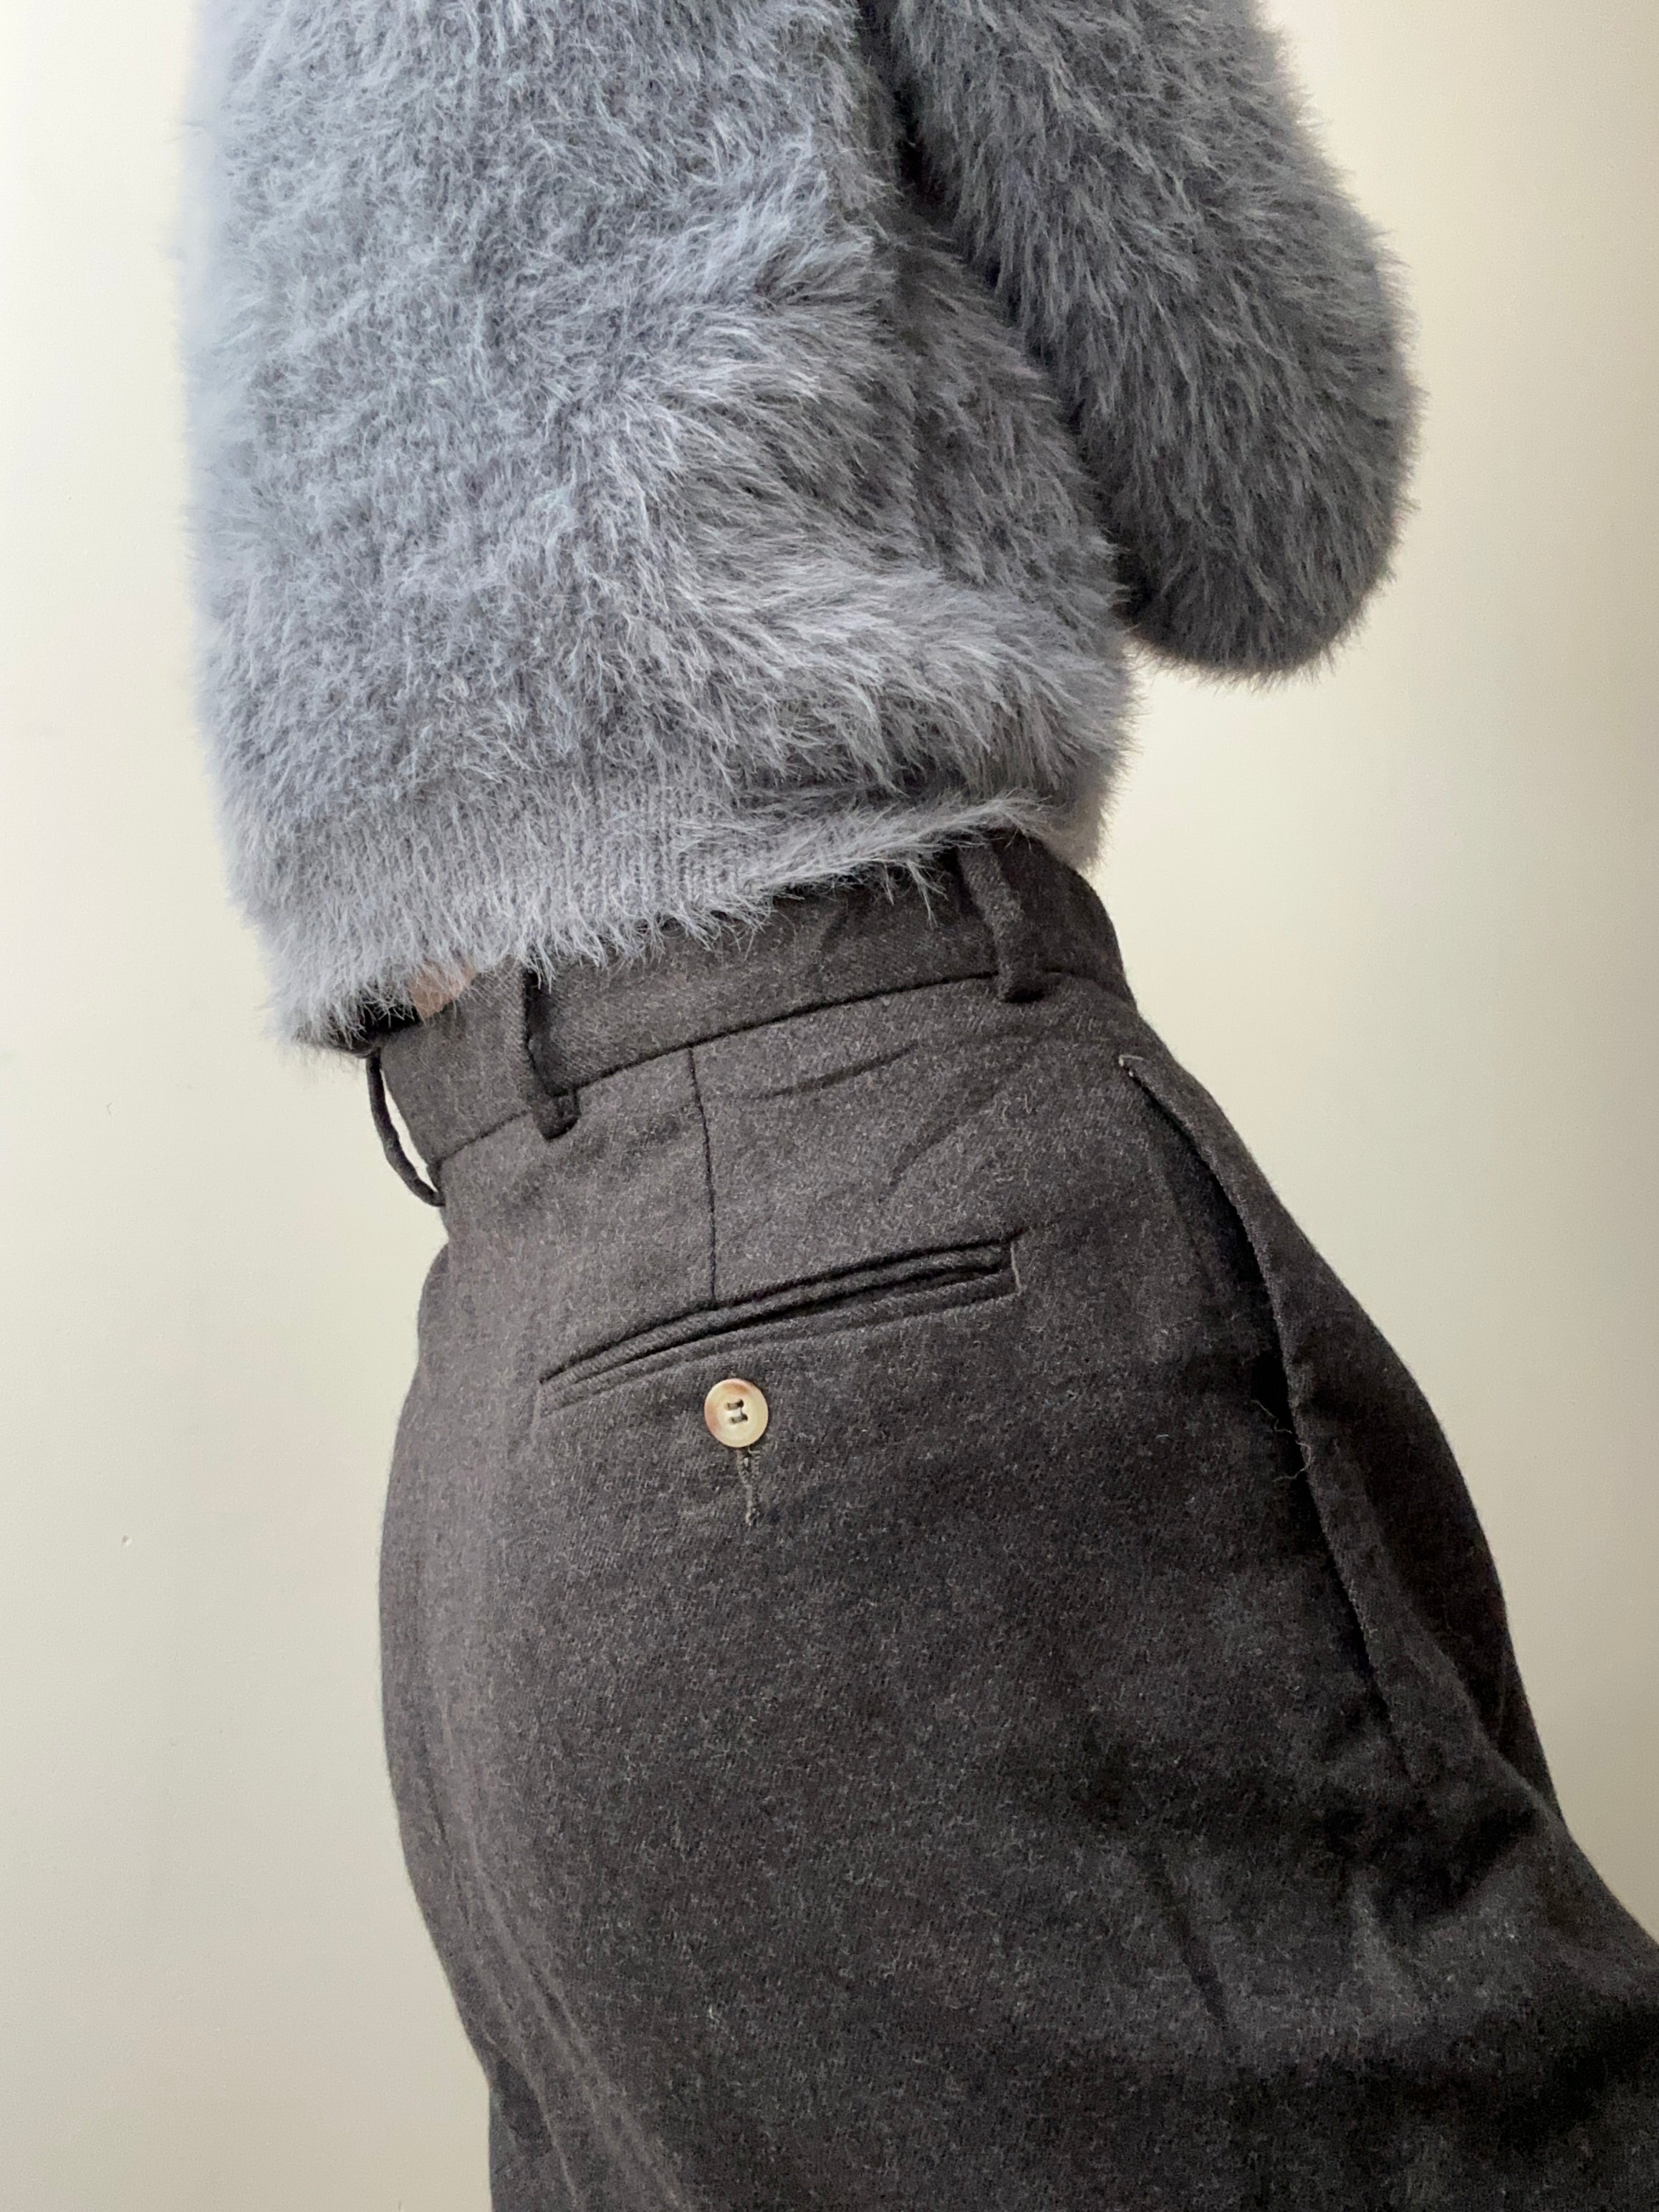 Future Nomads Pants Xlarge Grey Wool Vintage Pants